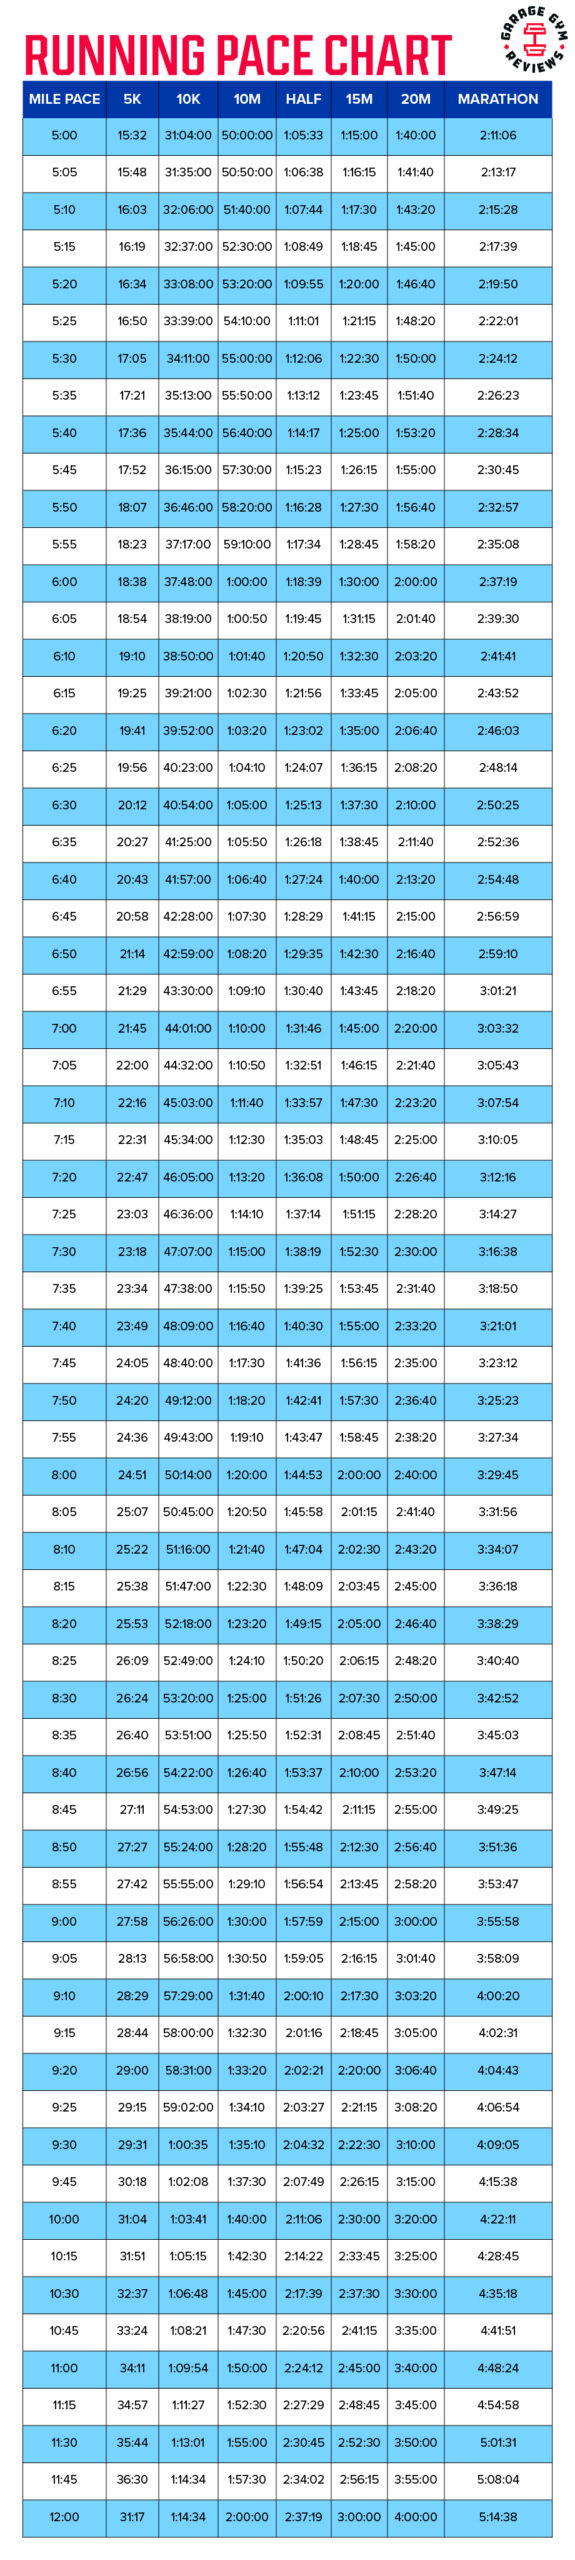 Running Pace Calculator & Chart